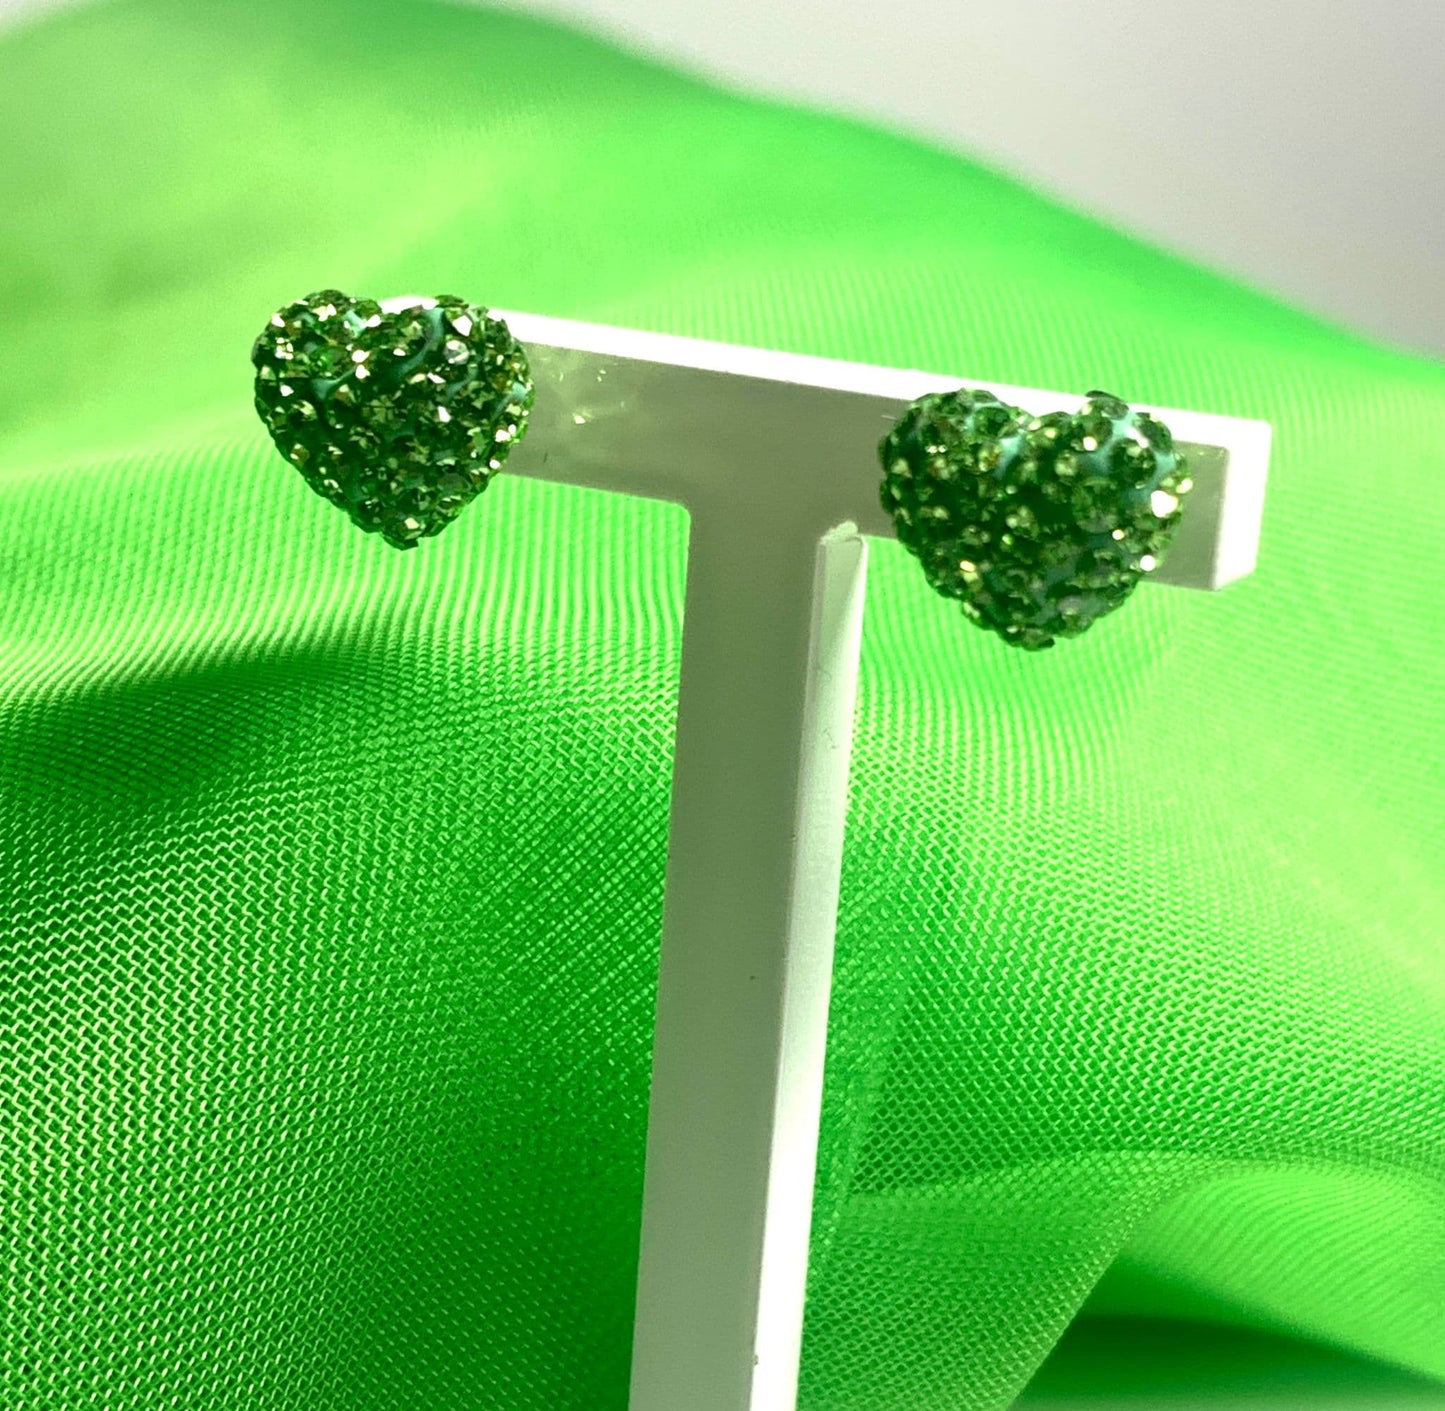 Tresor Paris light green heart shaped 10 mm stud earrings titanium